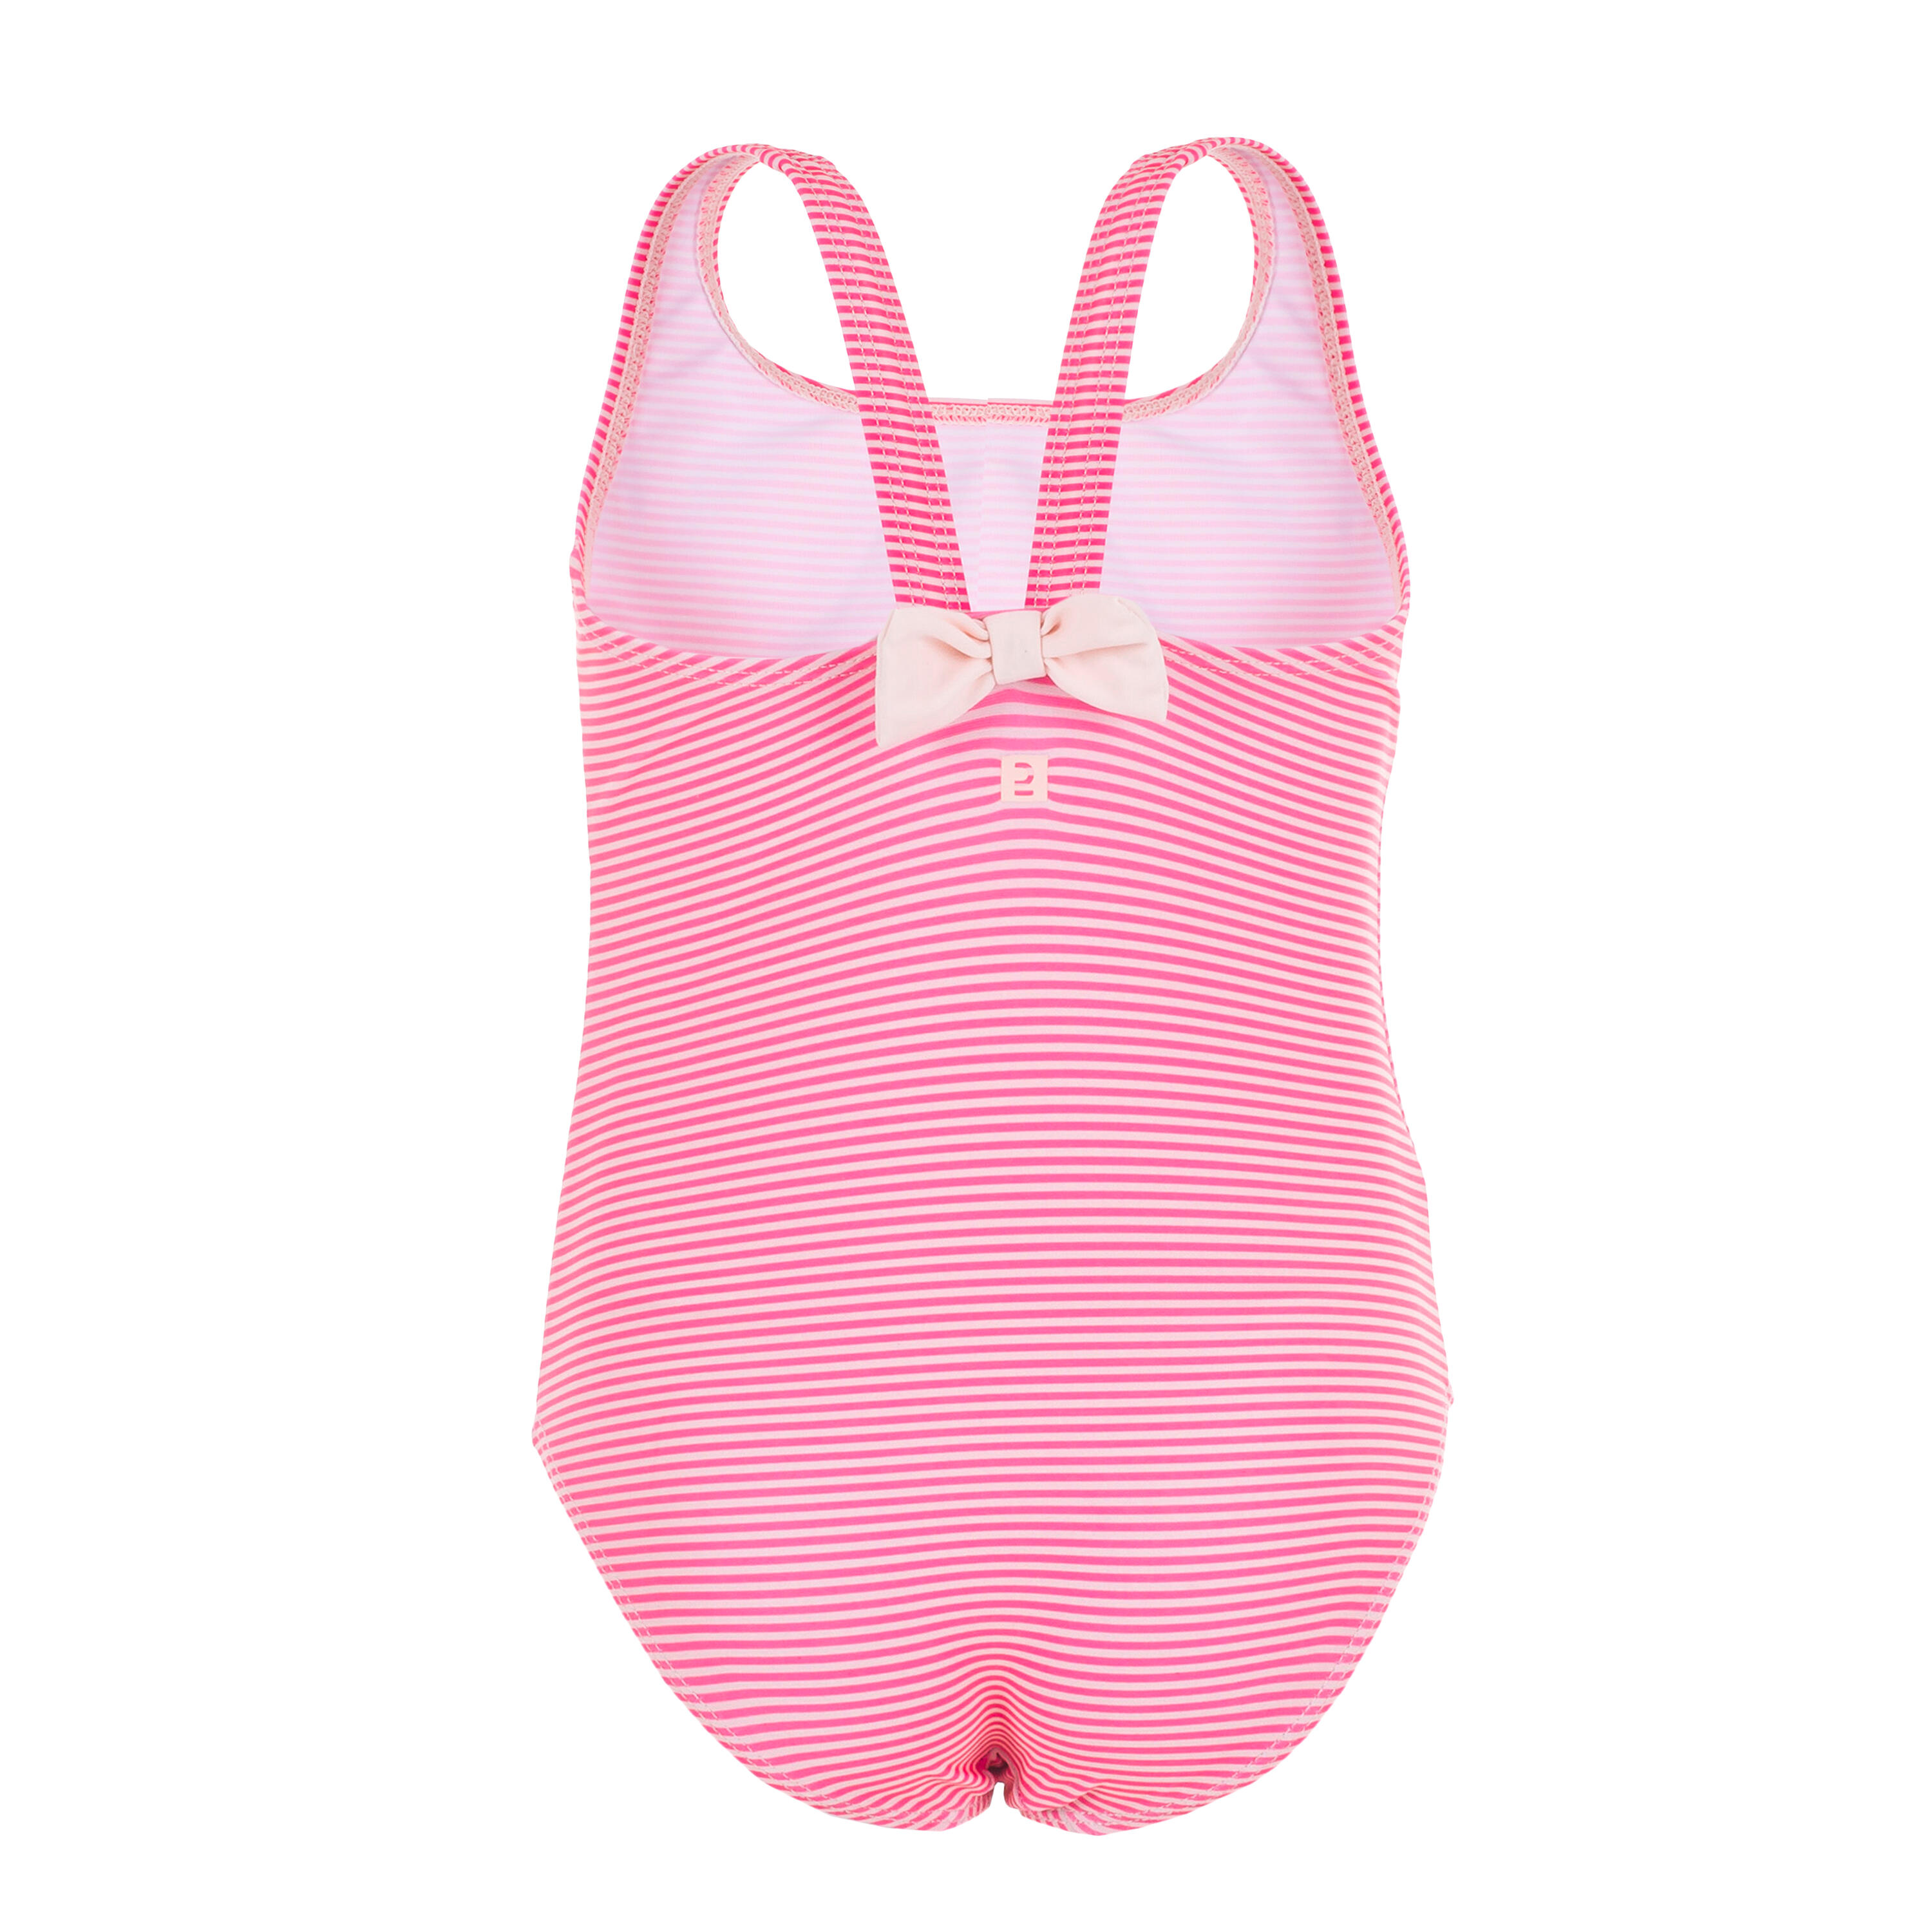 Baby Girls' 1-Piece Swimsuit - Pink Stripes Print 4/5